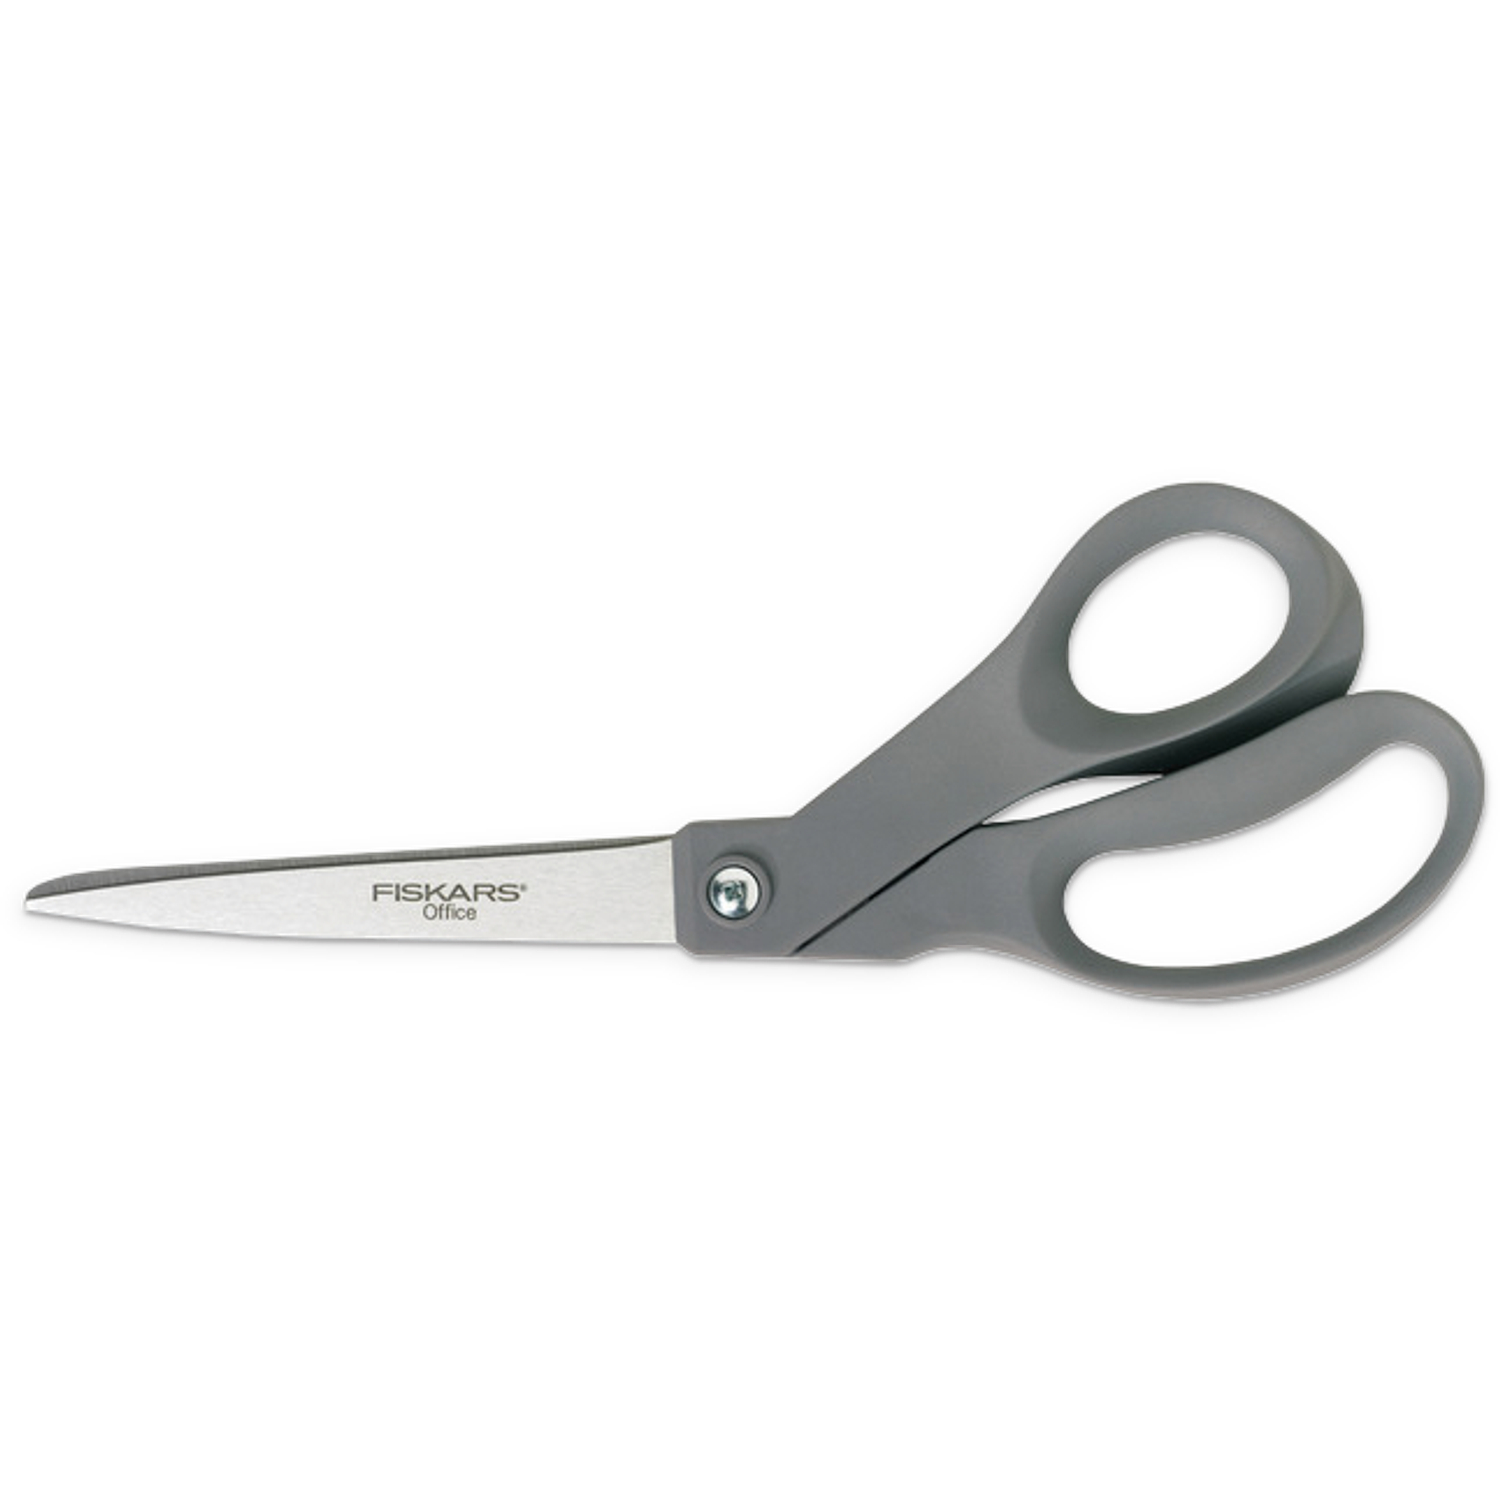 Fiskars 8” Left Handed Bent Scissors by Fiskars